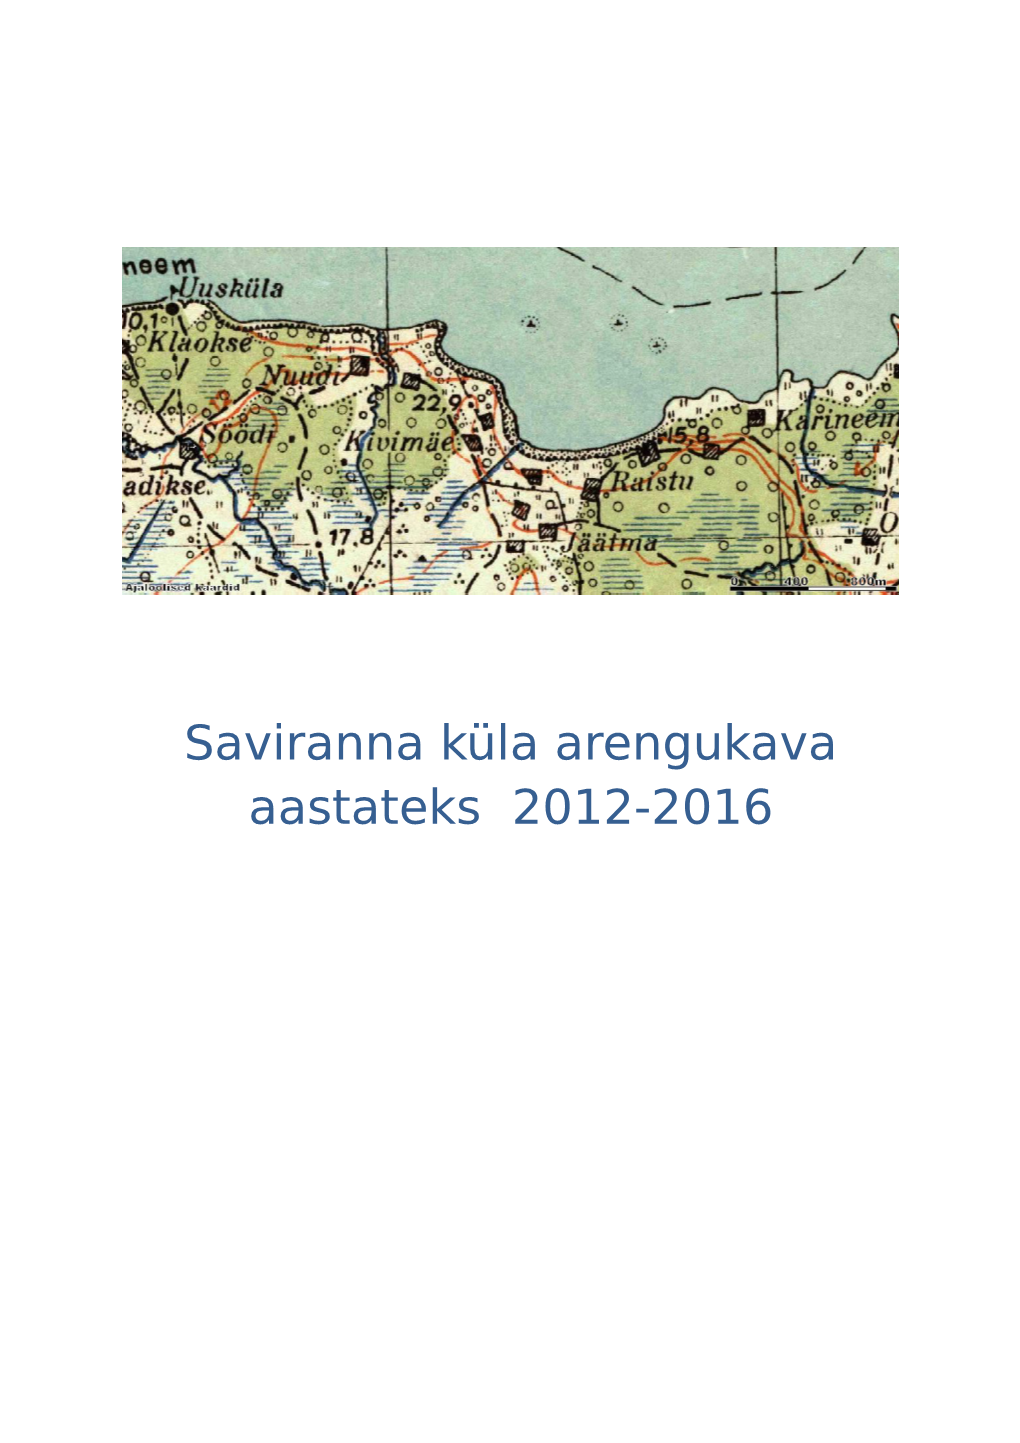 Saviranna Küla Arengukava Aastateks 2012-2016 Saviranna Küla Arengukava Aastateks 2012-2016 on Kinnitanud Külakoosolek 15.05.2012